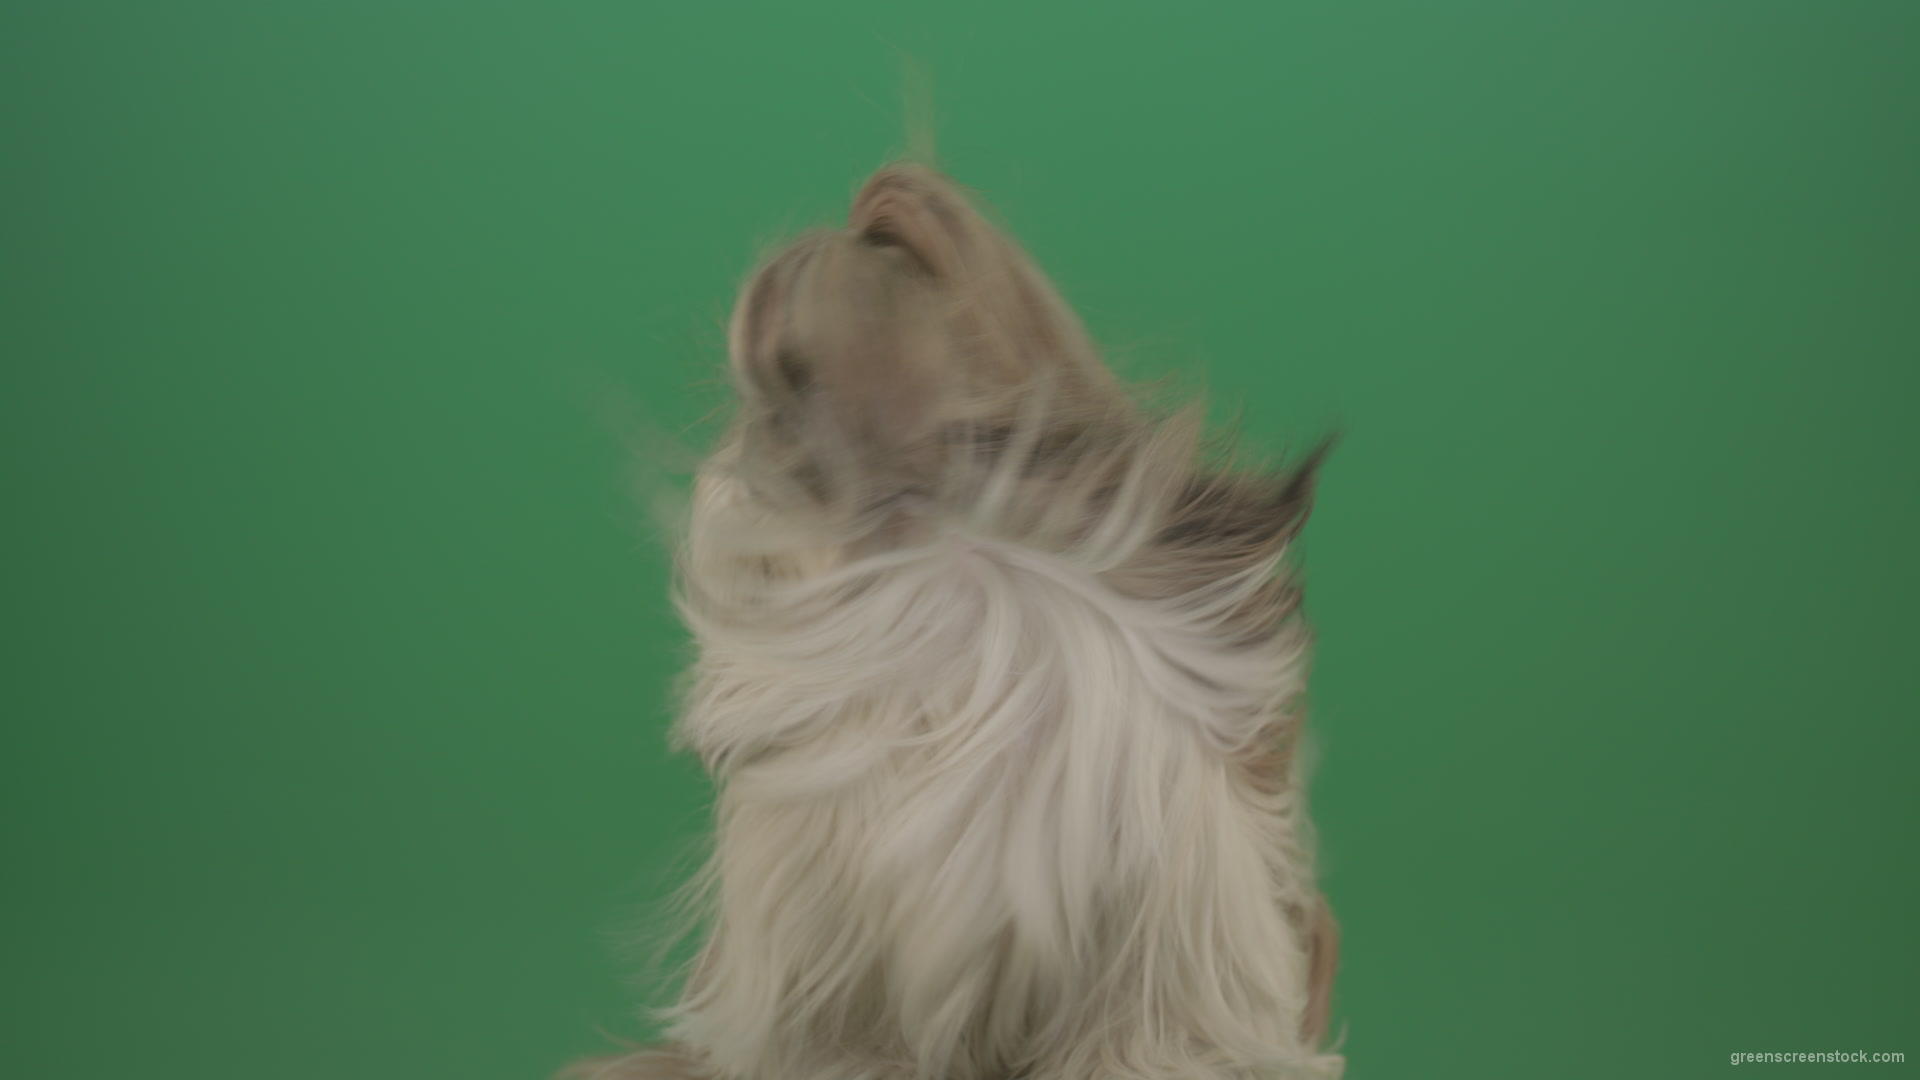 Fashion-long-hair-Shihtzu-dog-in-wind-turbulence-hairstyle-isolated-on-green-screen_001 Green Screen Stock